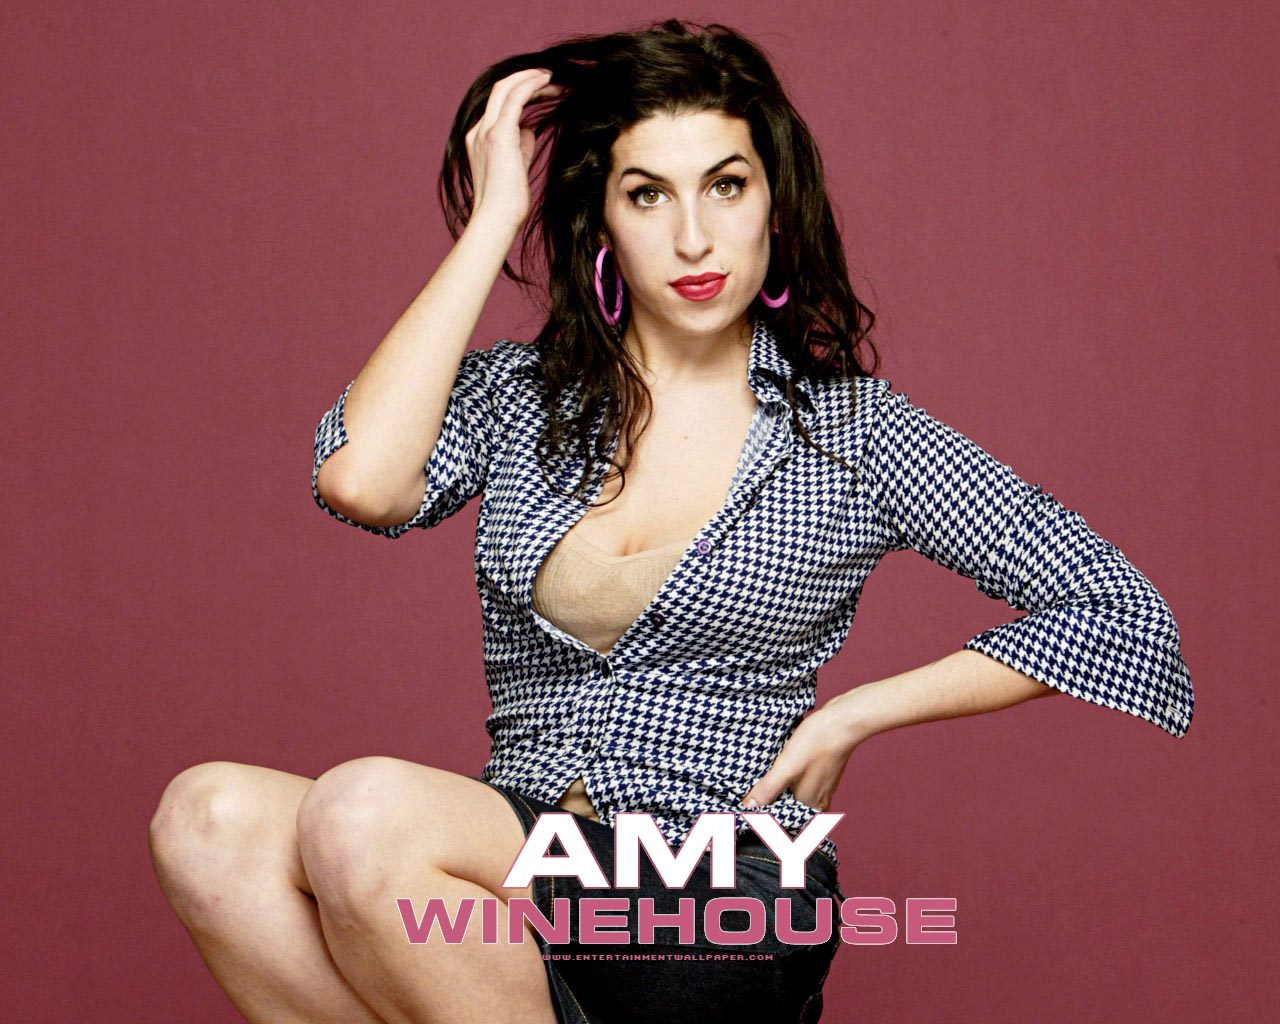 Amy Winehouse secretly held a concert Comeback - Info 24 Online